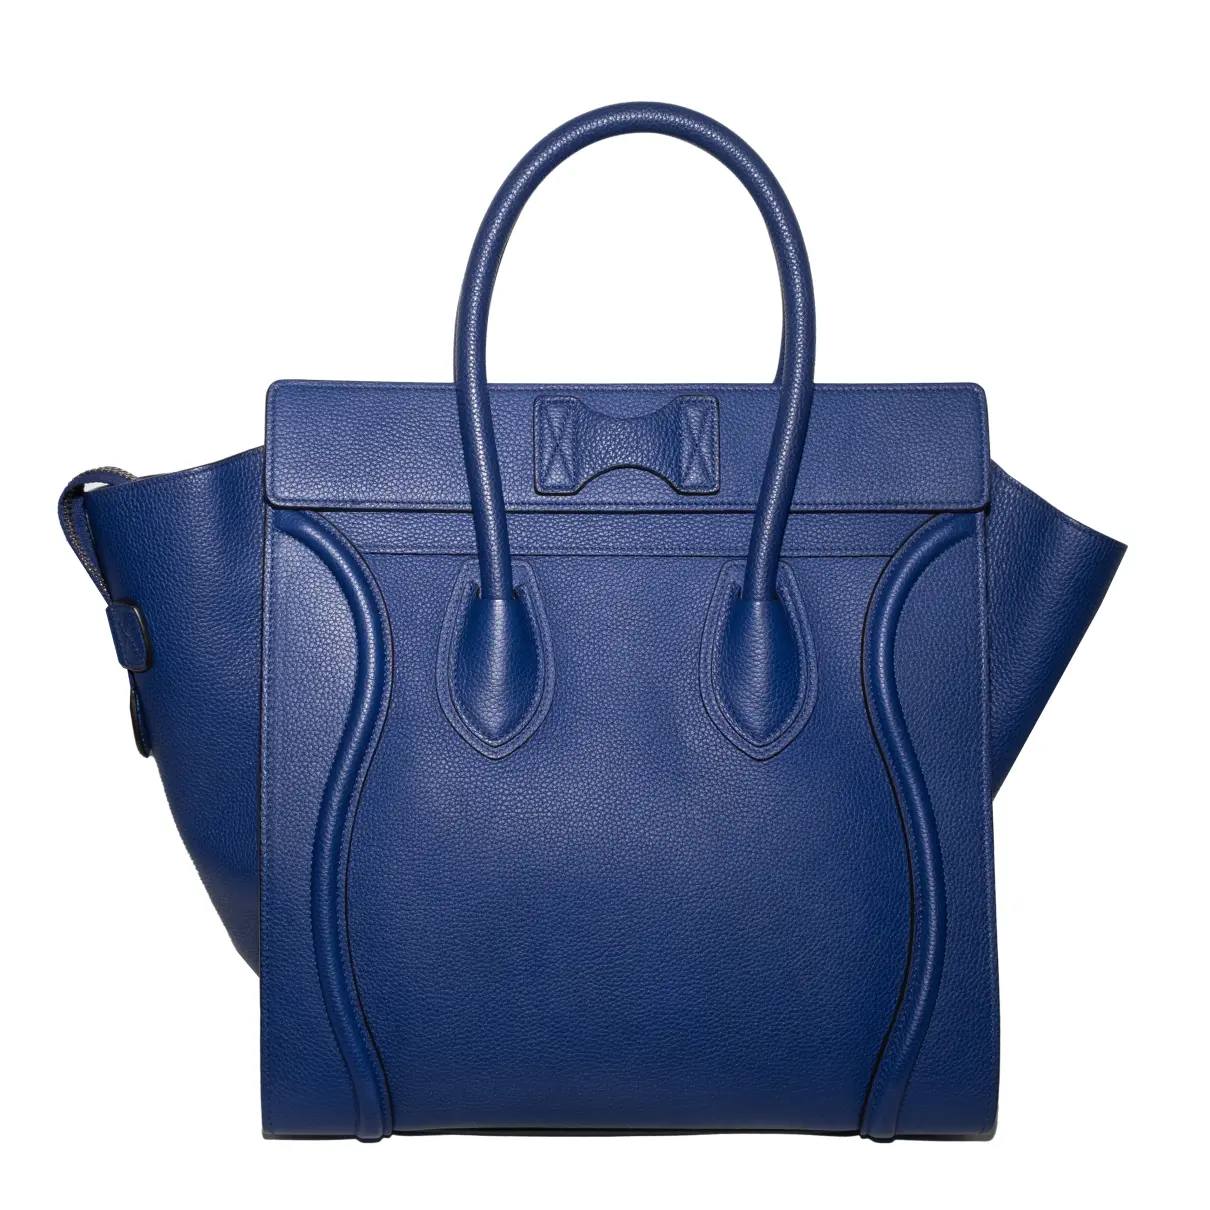 Buy Celine Luggage leather clutch bag online